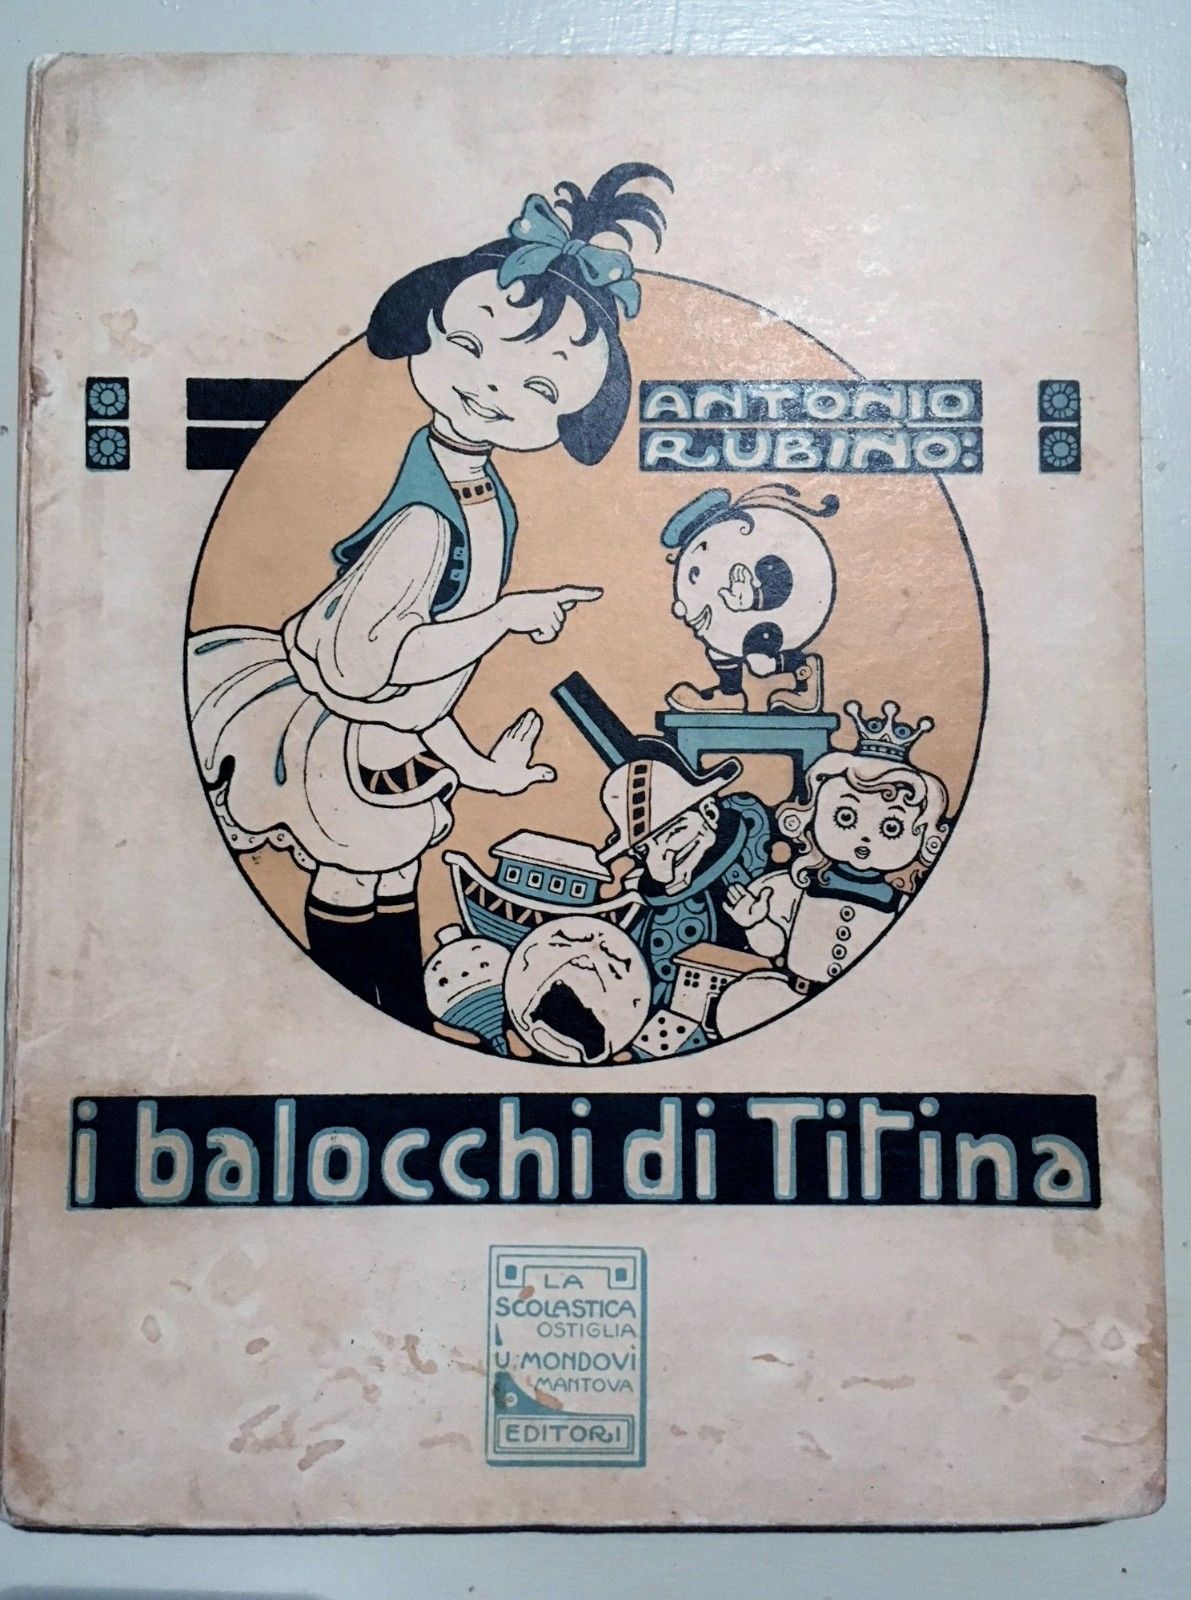 Rubino: I balocchi di Titina, 1912